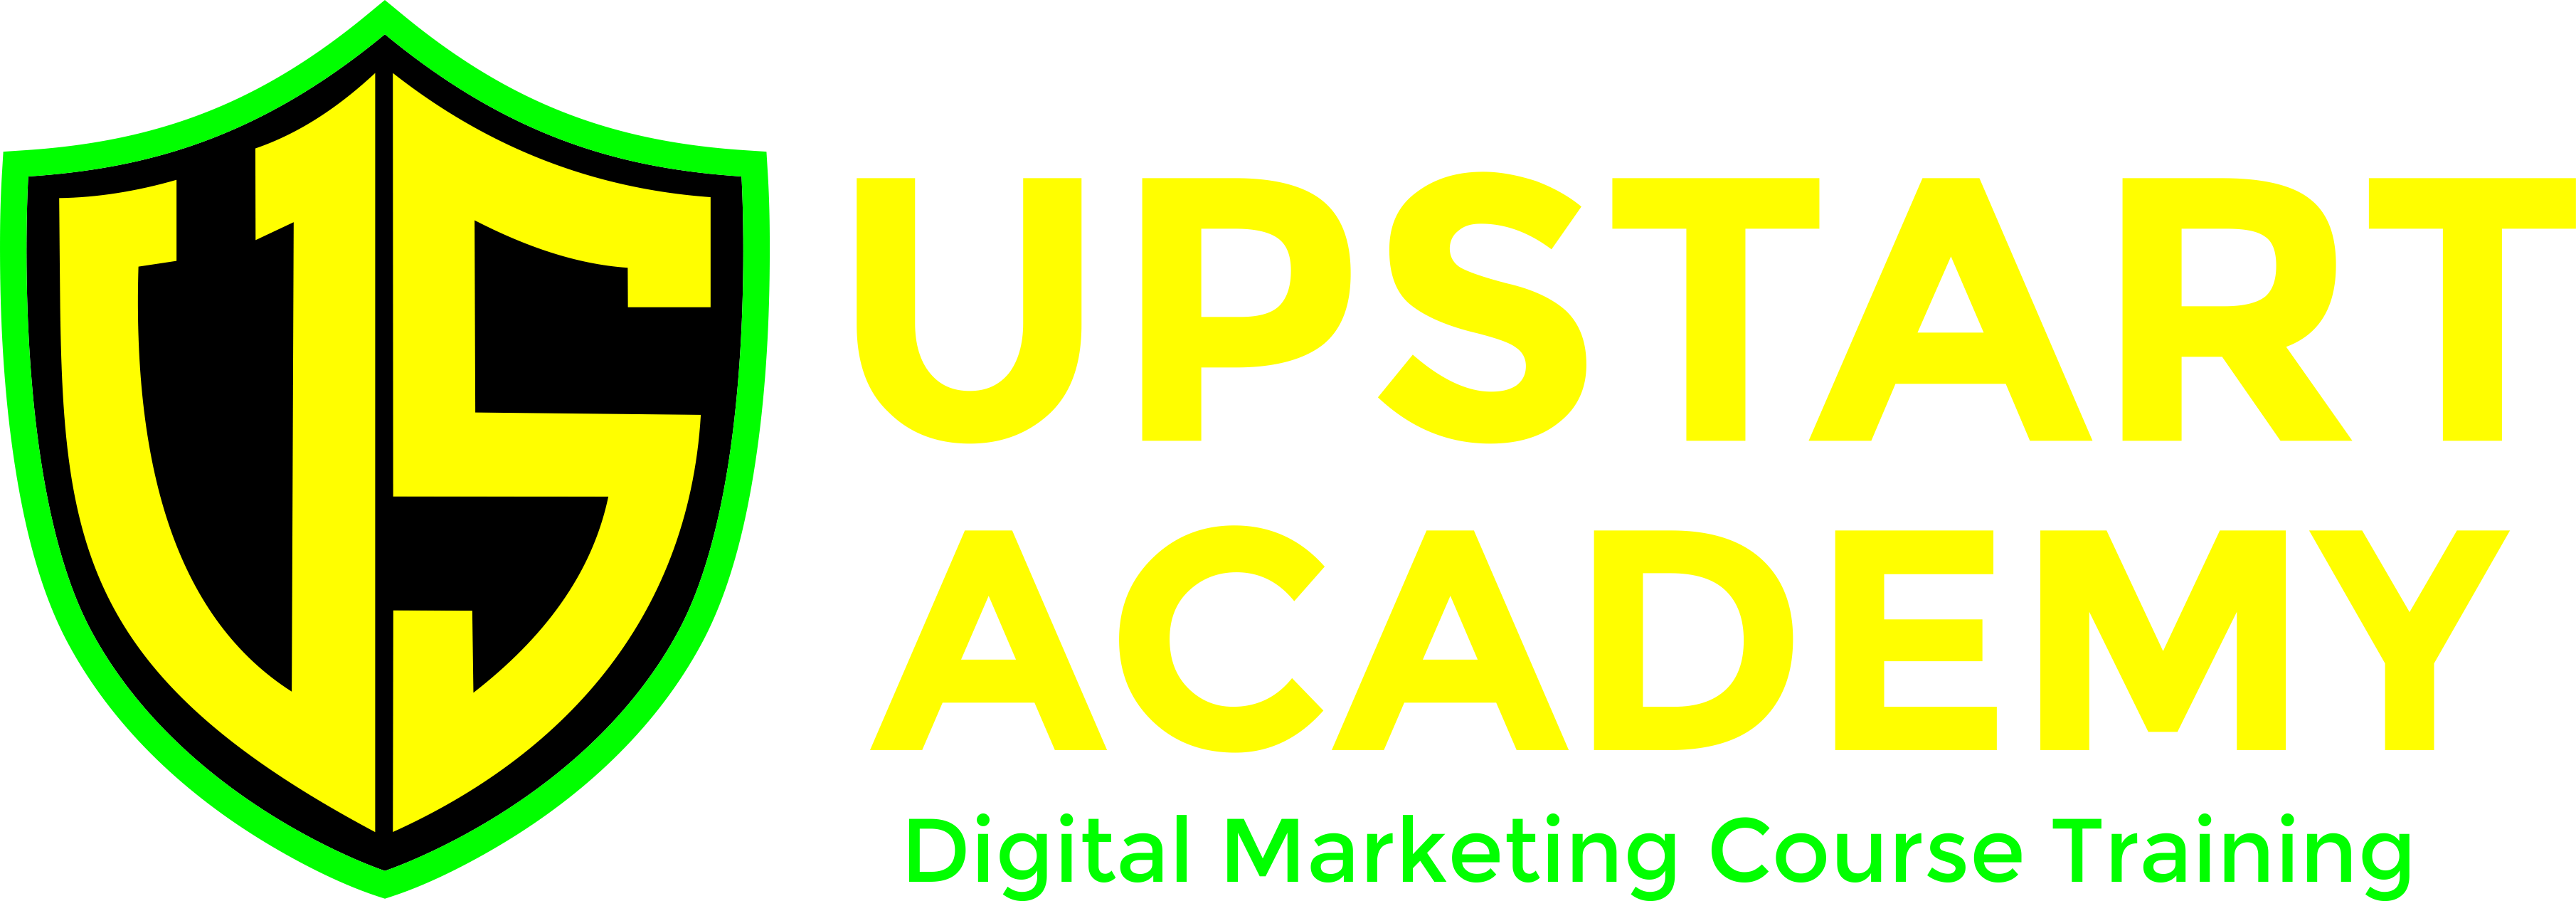 upstart academy